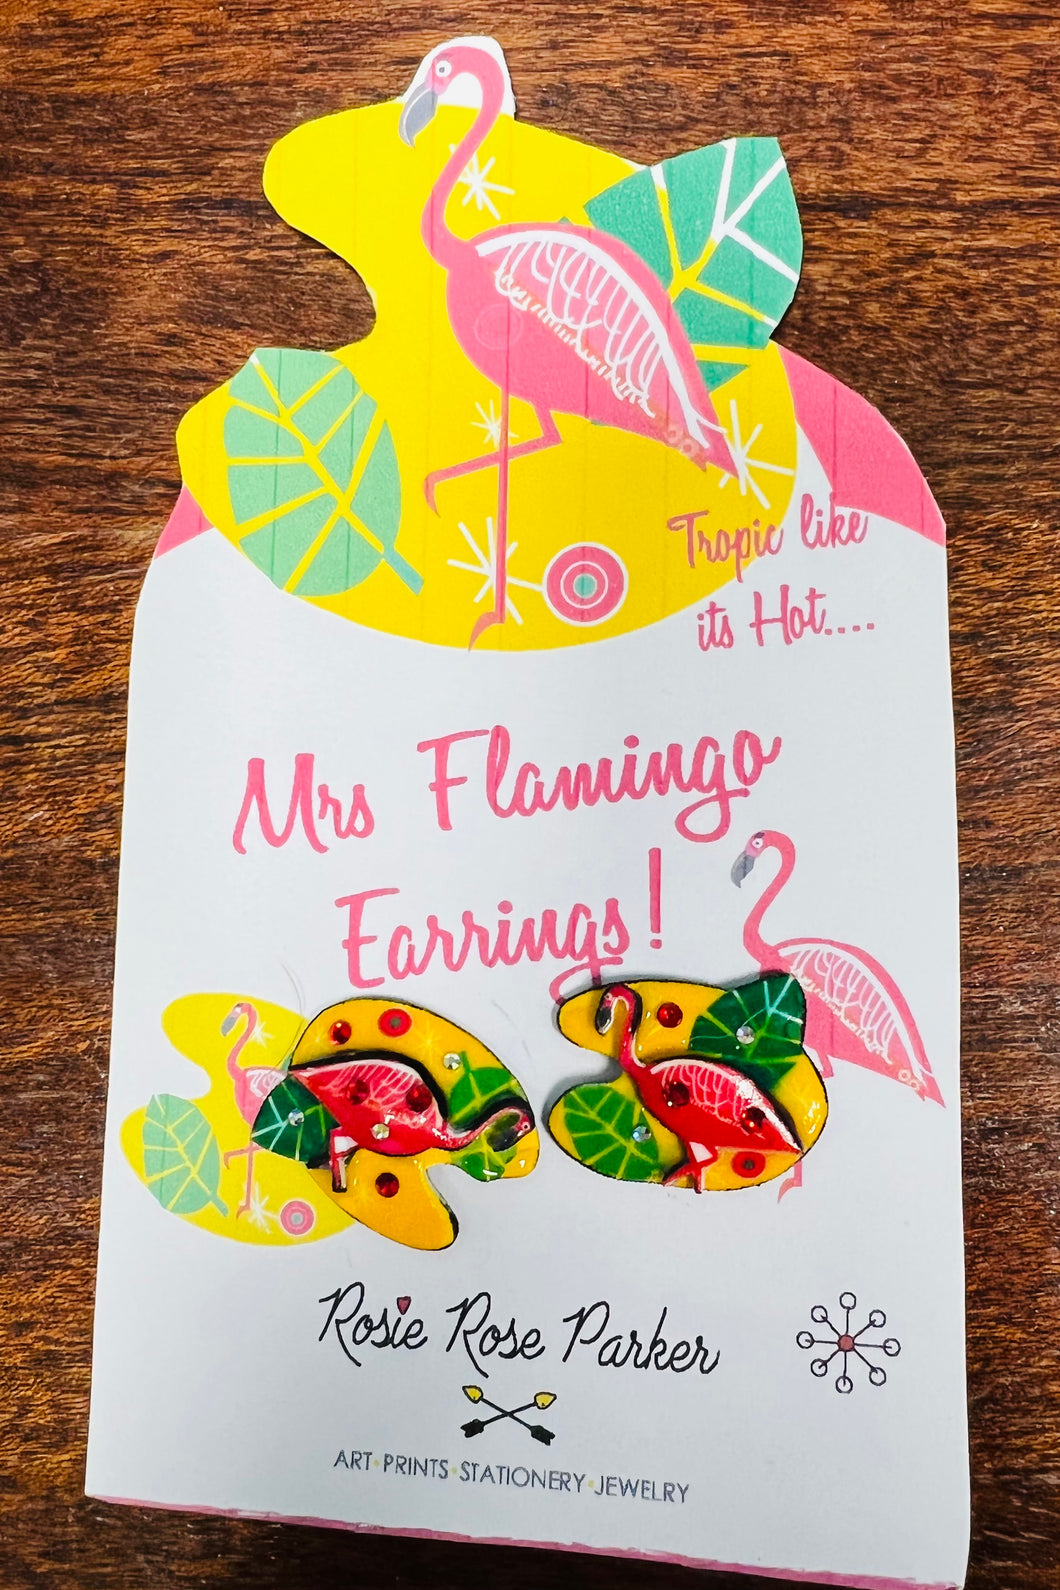 Clustlysau Mrs Flamingo Kitsch / Kitsch Mrs Flamingo earrings